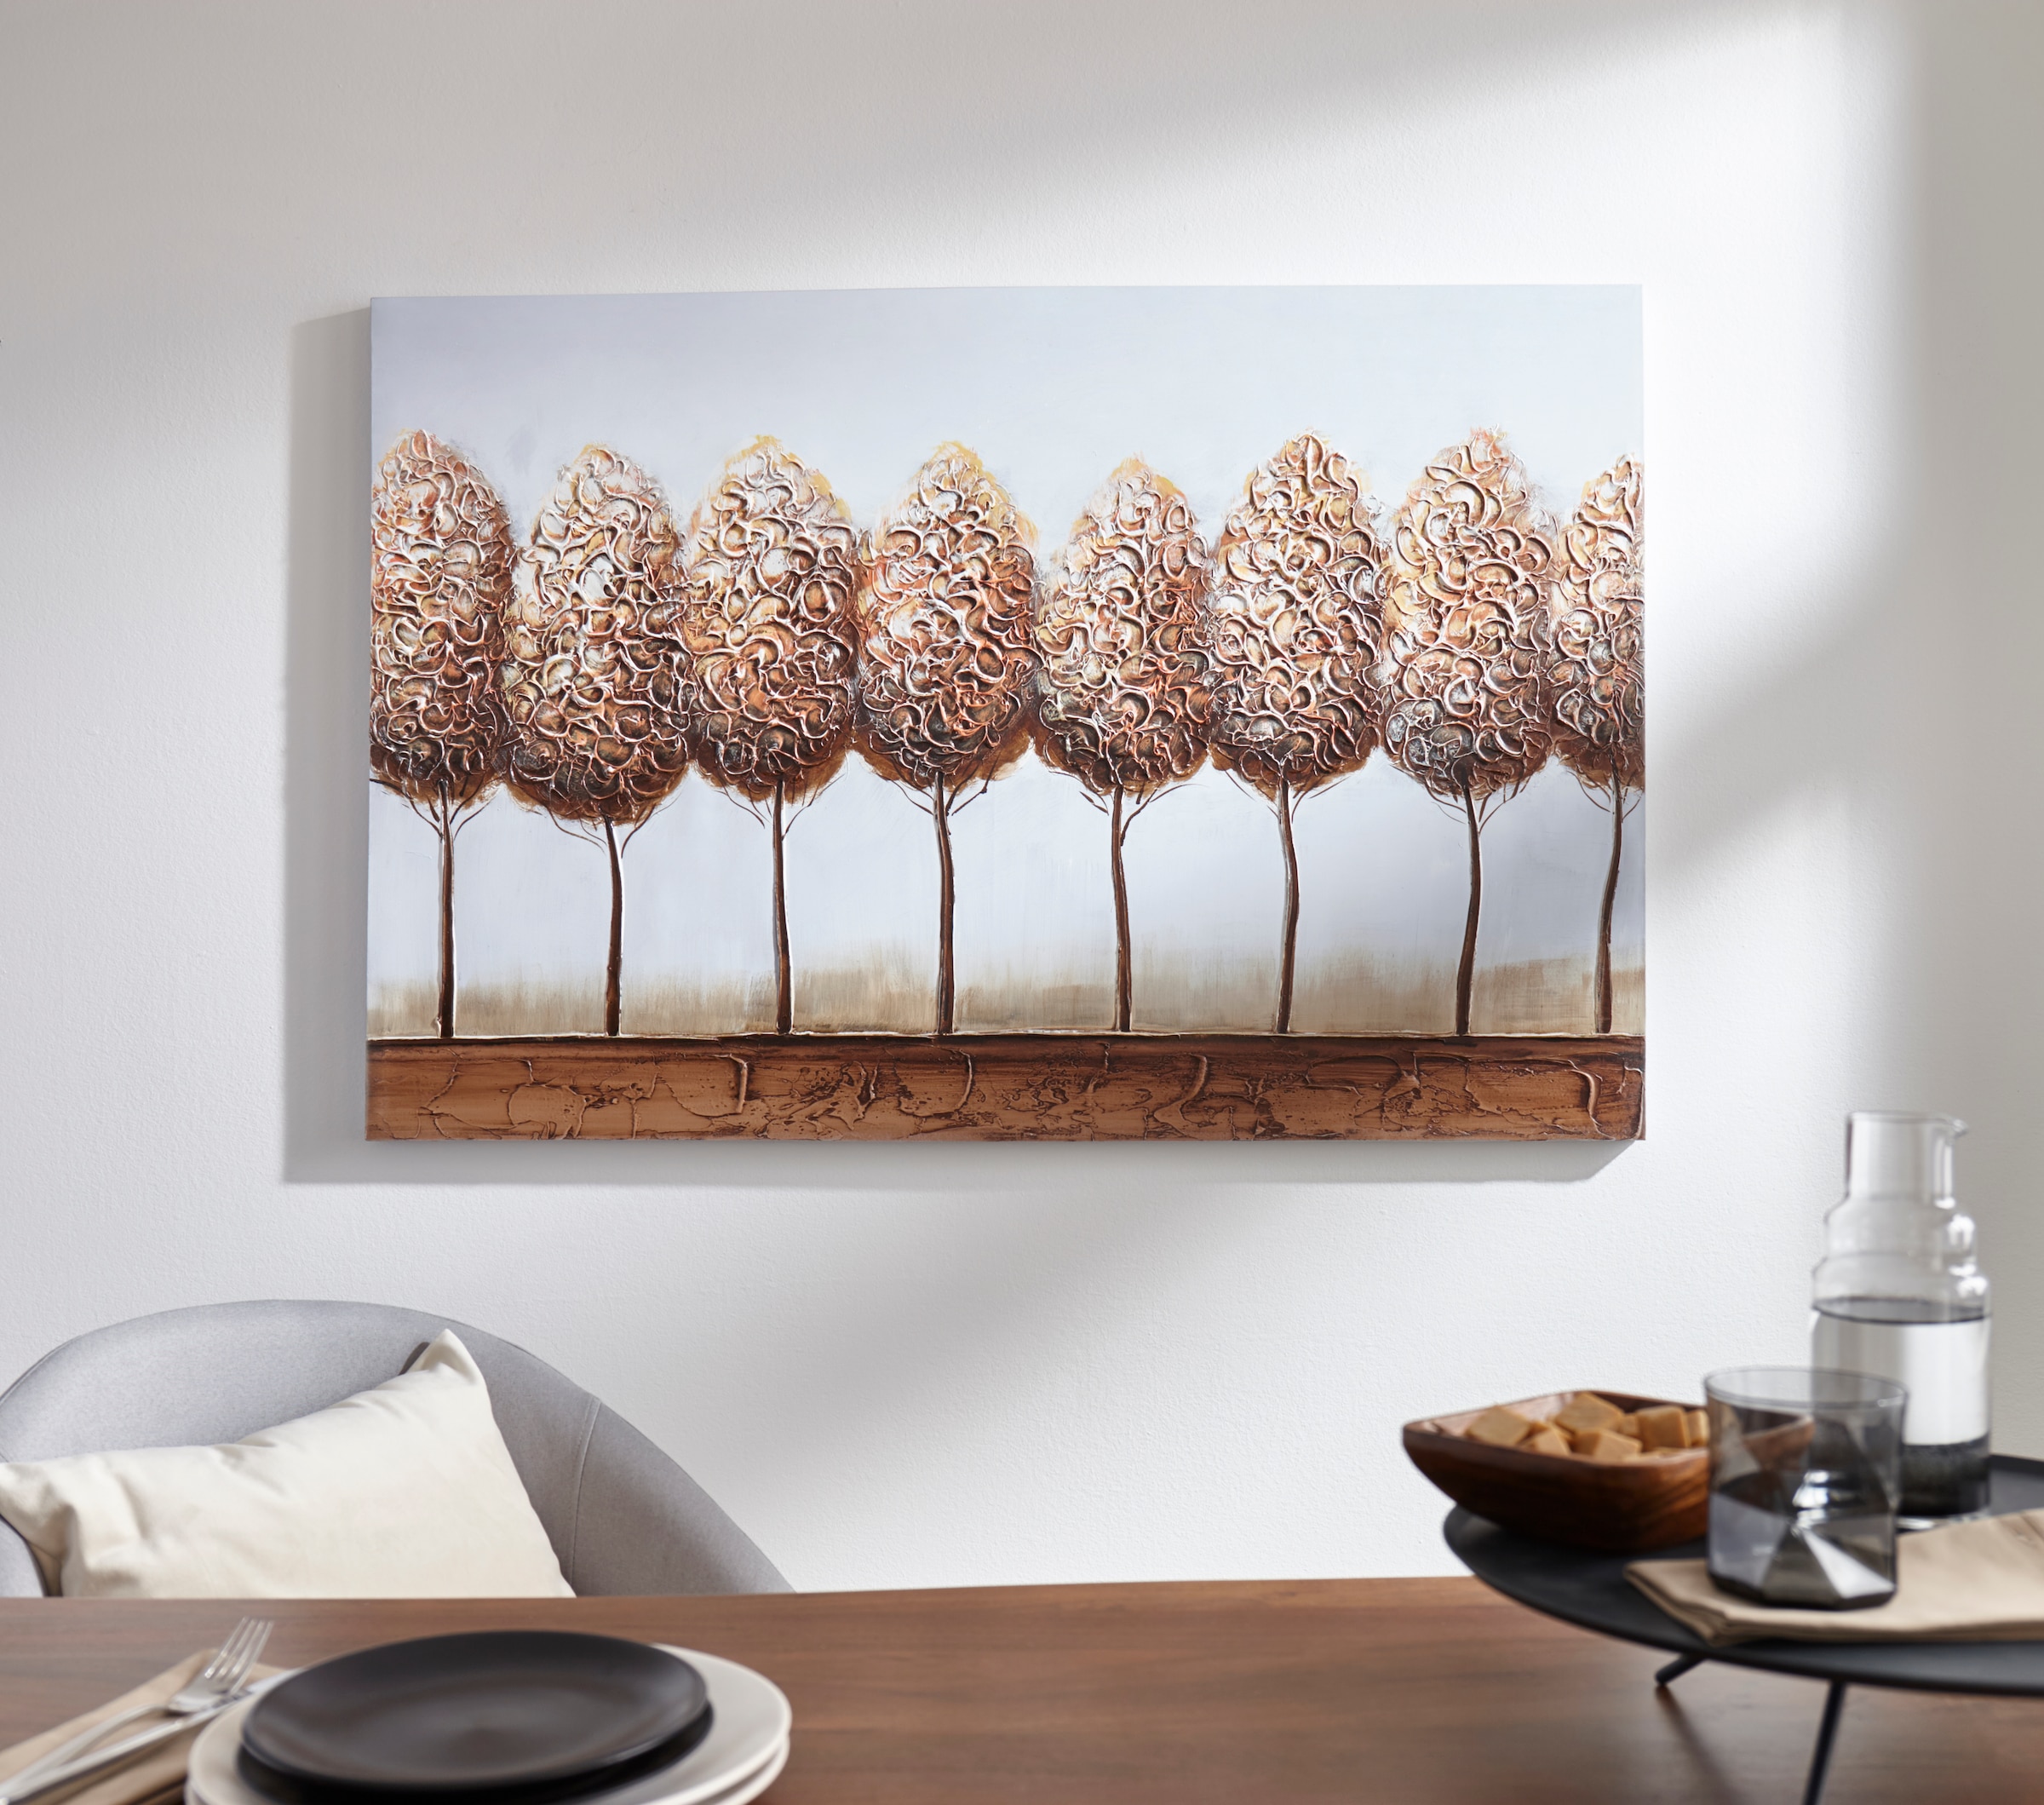 Home affaire Leinwandbild »Trees«, Motiv Bäume, 120x80 cm, Wohnzimmer